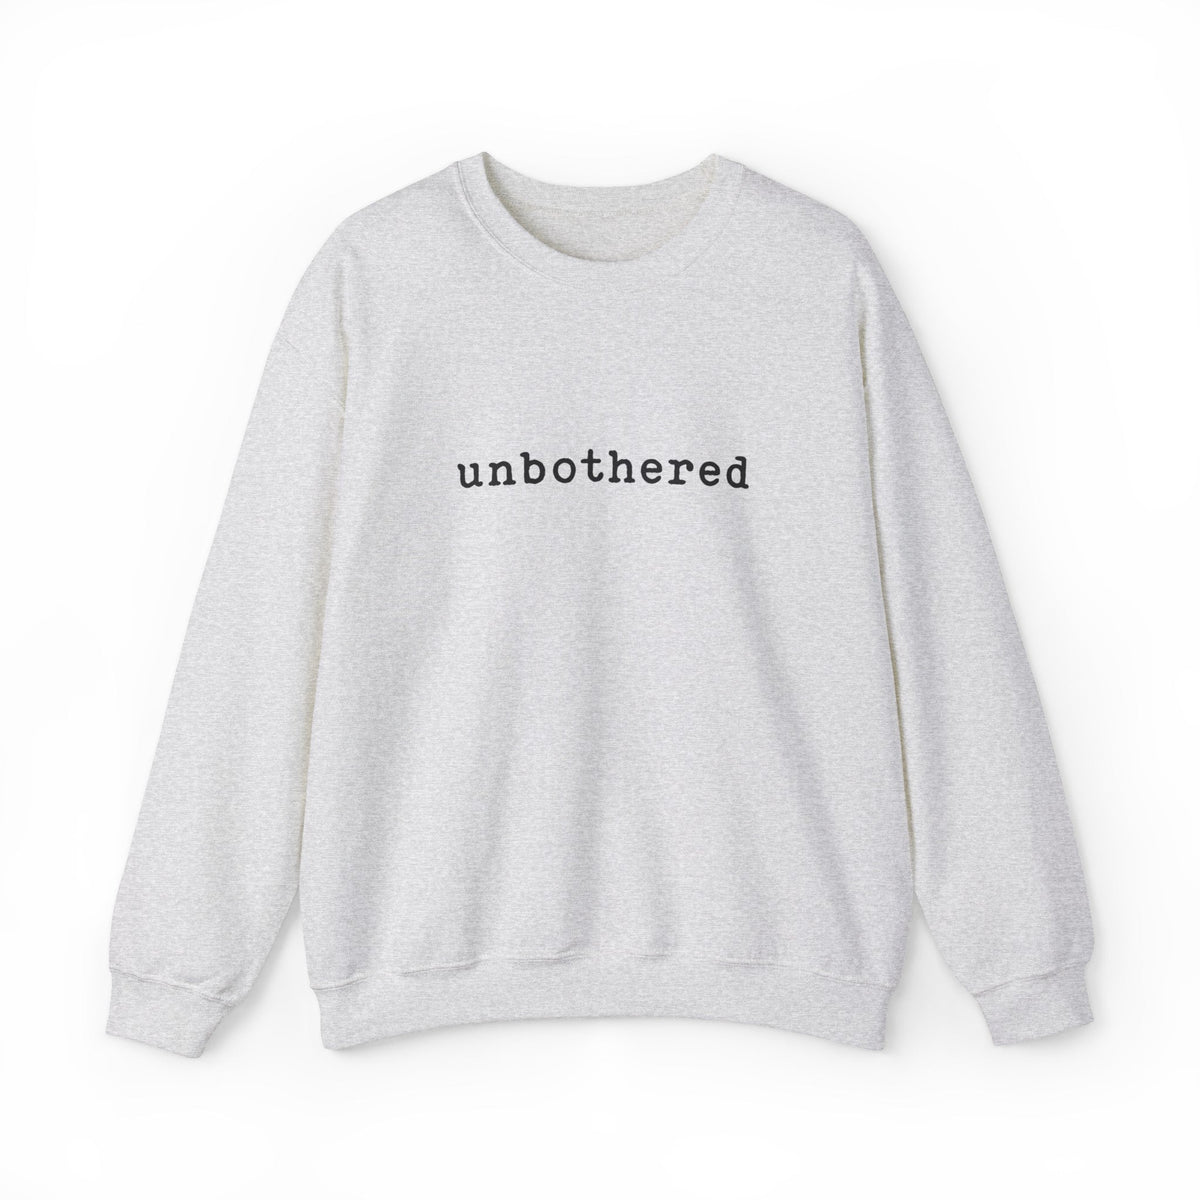 Unbothered Typewriter Long Sleeve Crew Neck Sweatshirt - Goth Cloth Co.Sweatshirt26852264050805612366